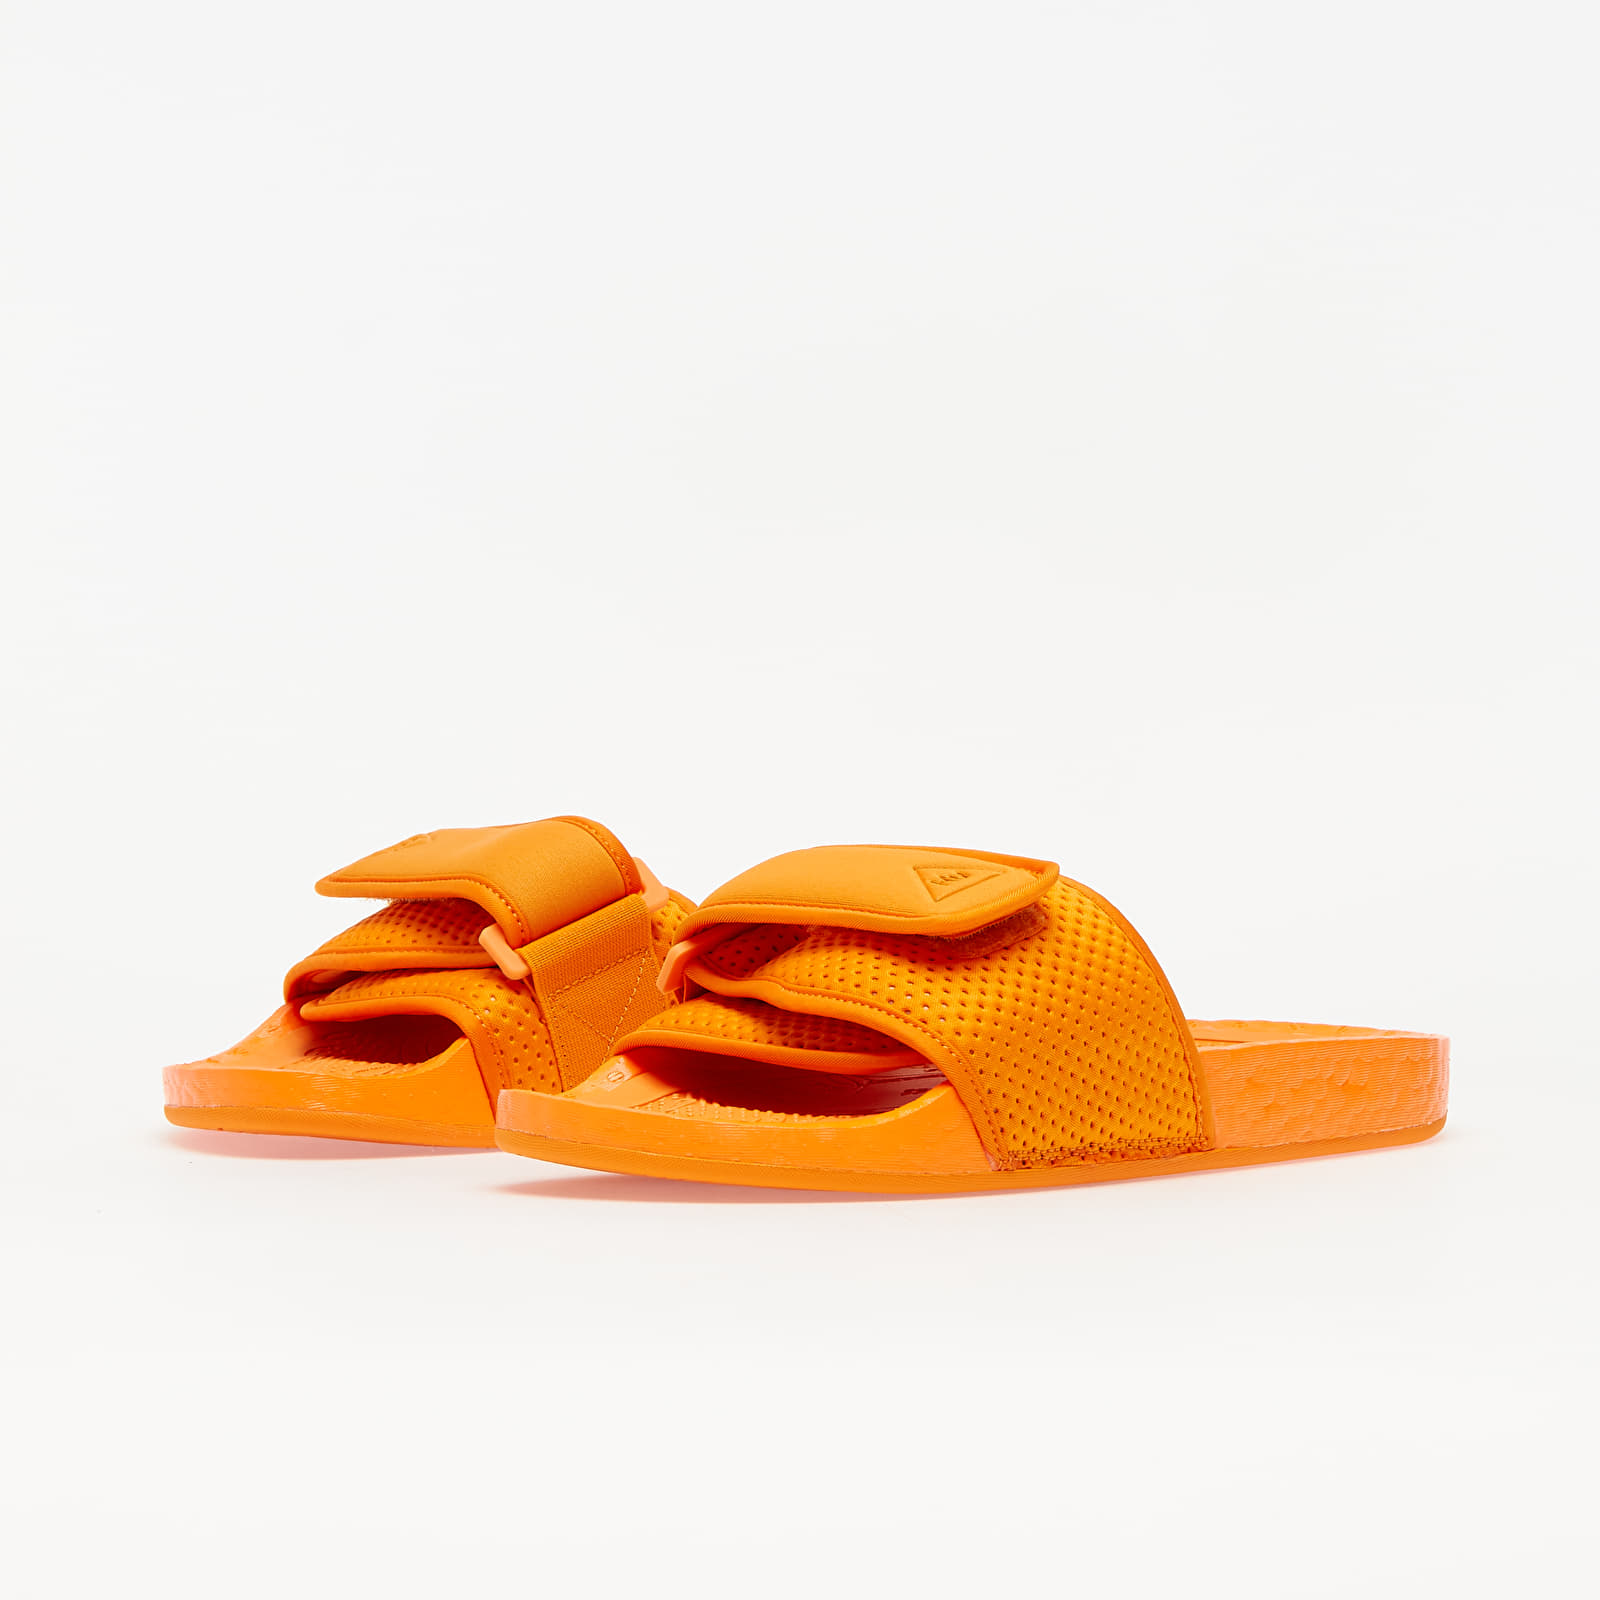 adidas x Pharrell Williams Chancletas HU Bright Orange/ Bright Orange/ Bright Orange FV7261